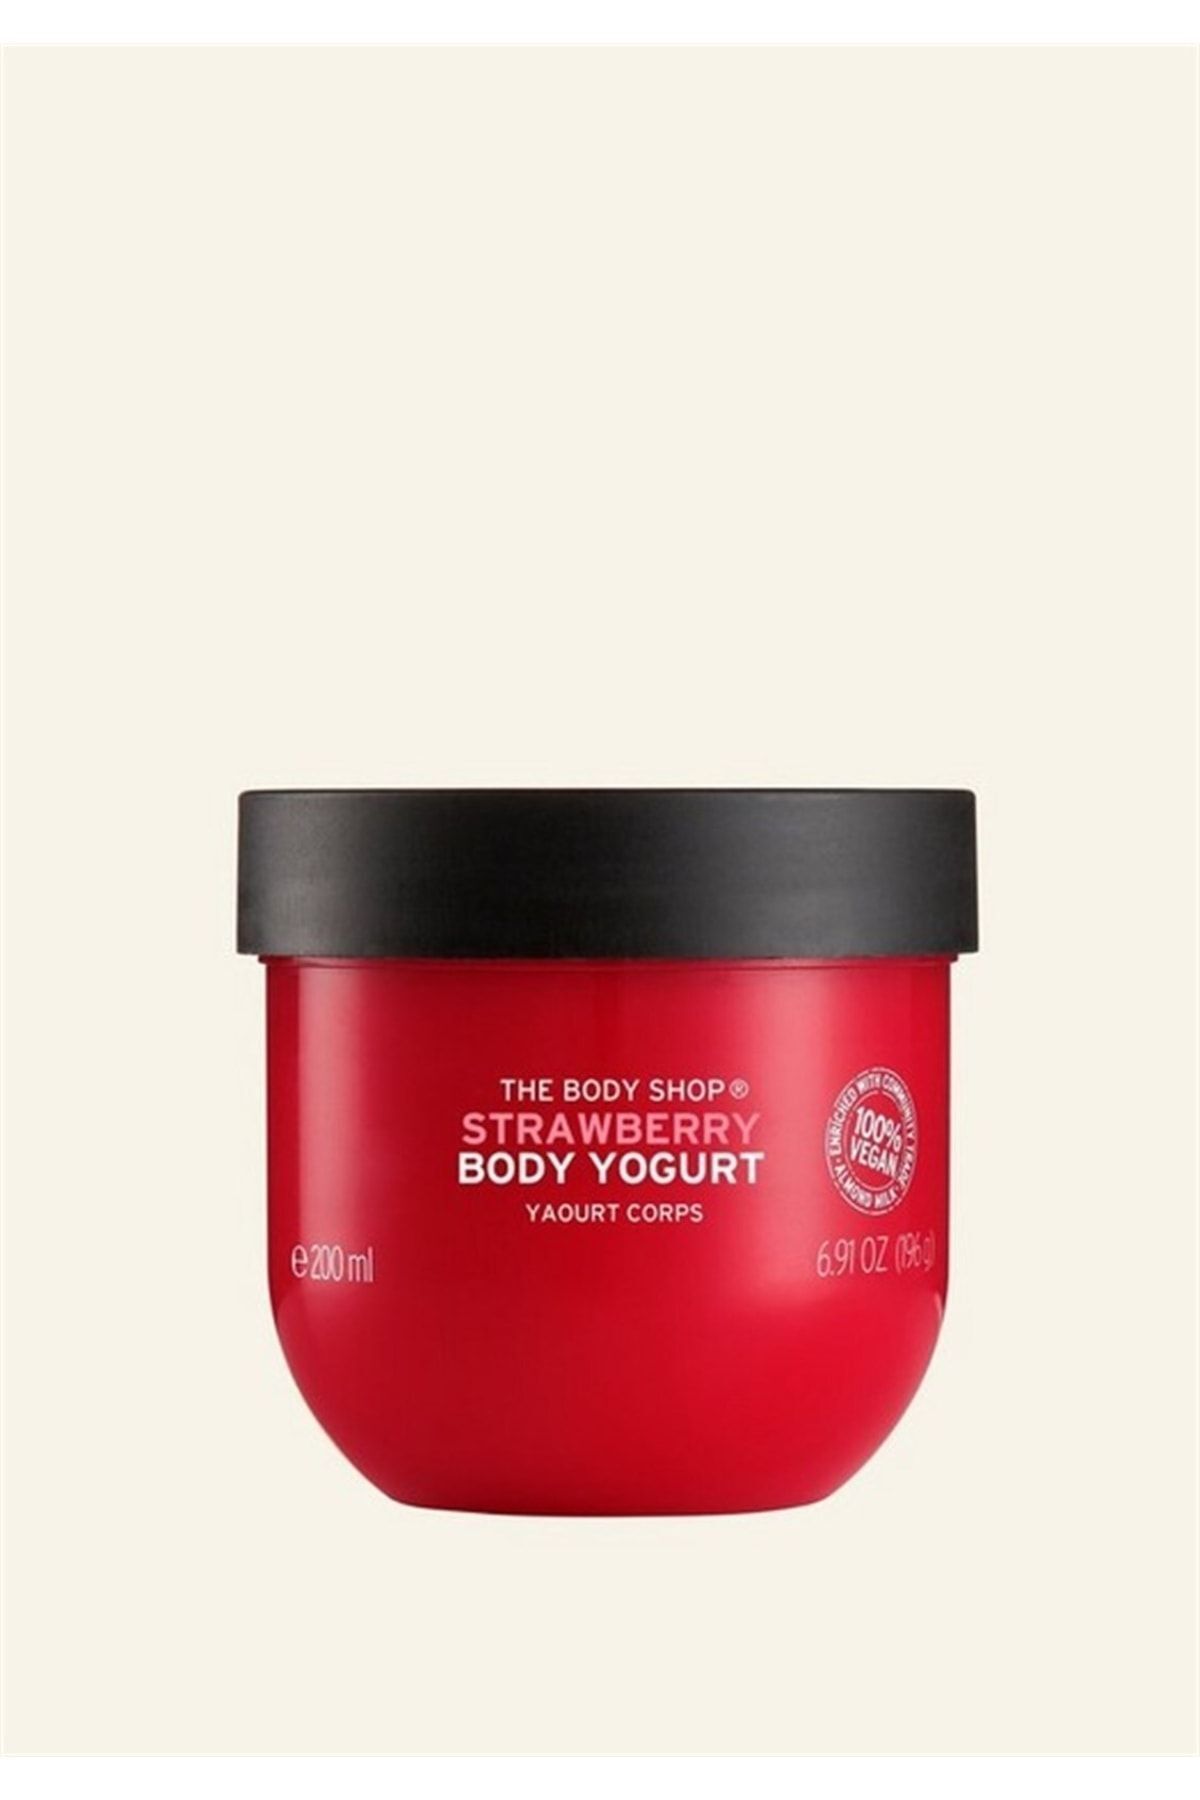 THE BODY SHOP Strawberry Body Yogurt